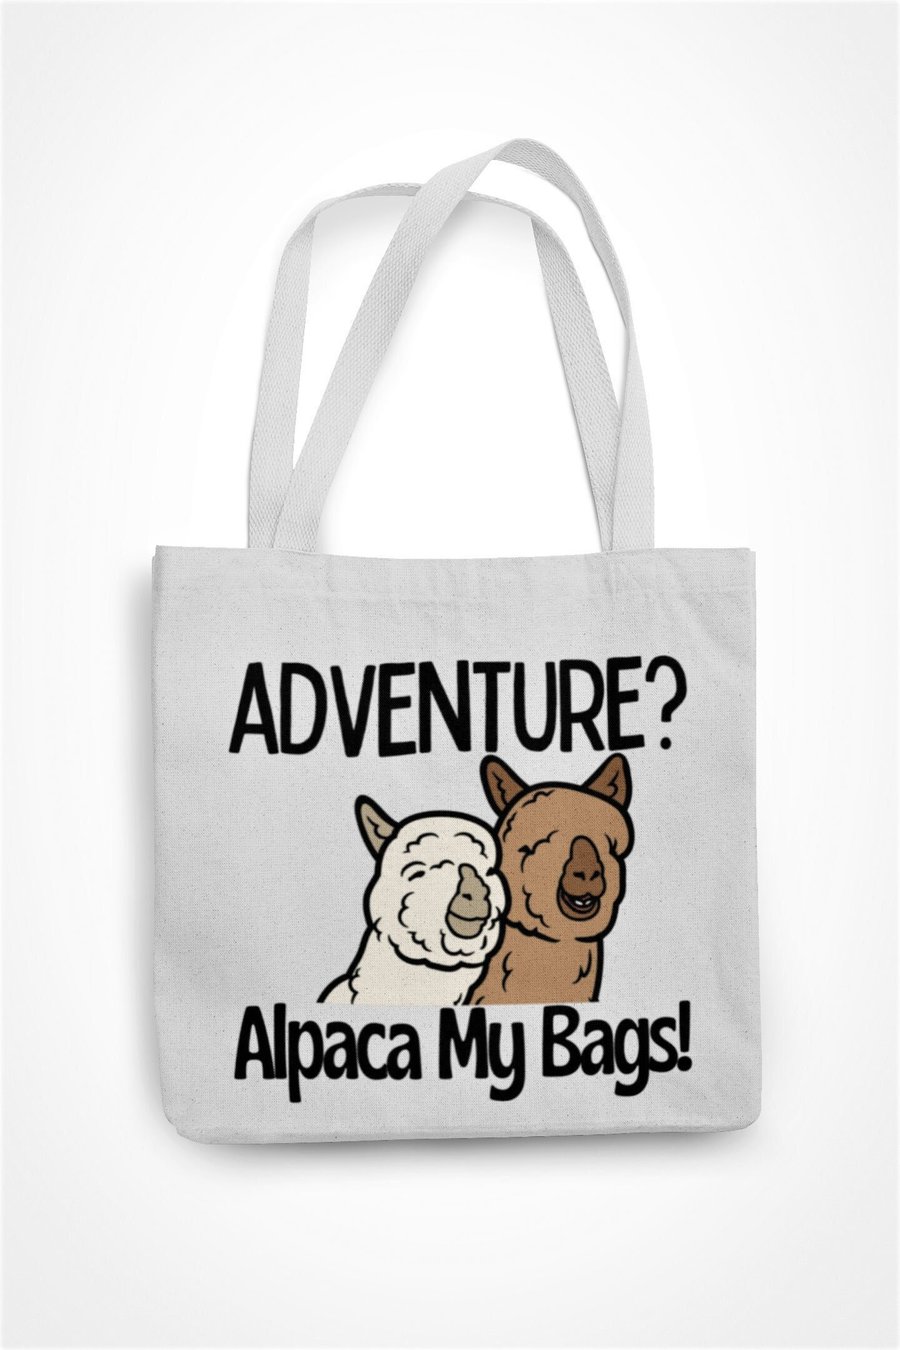 Adventure? Alpaca My Bags Tote Bag Novelty Alpaca Farm Animal Eco Friendly 